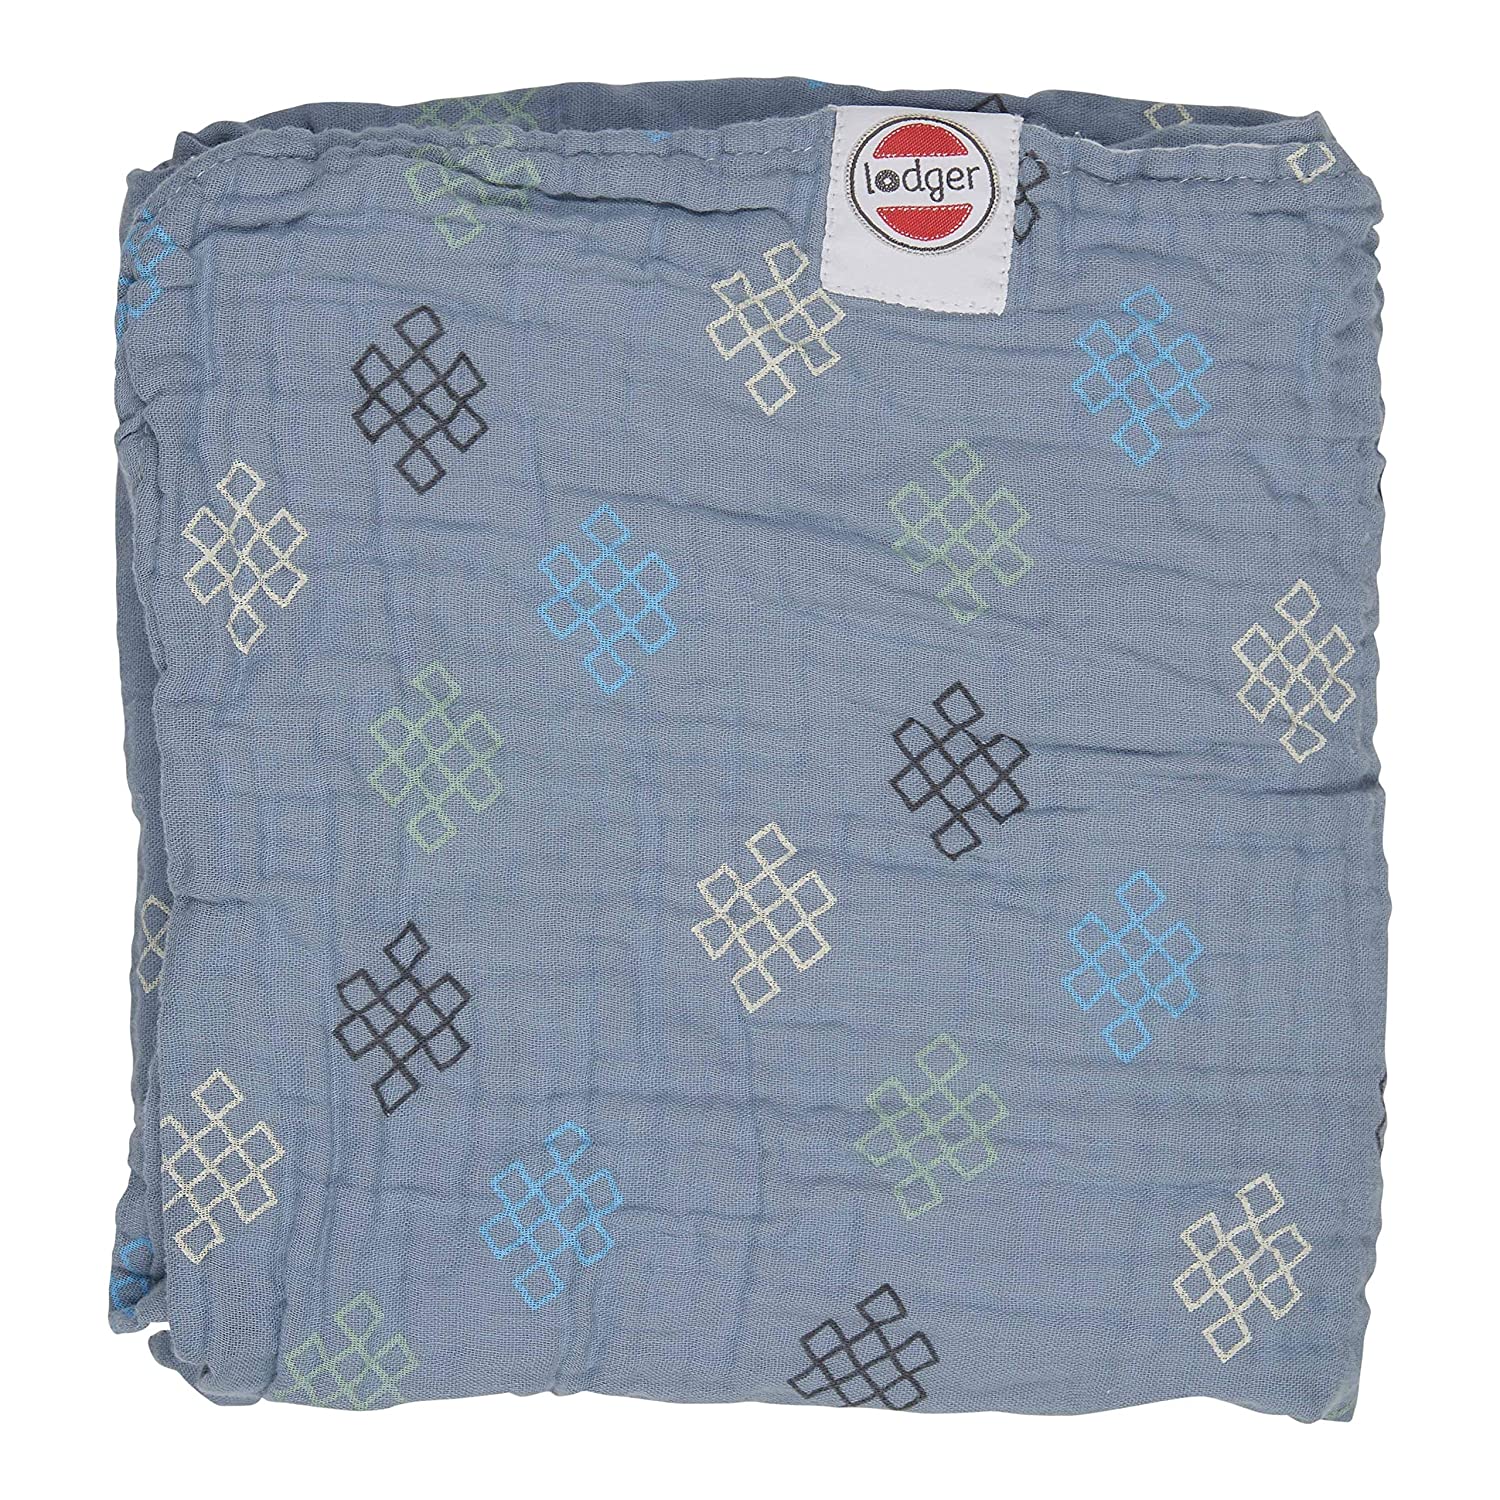 Lodger DM6.7.002 074 120 Baby Blanket Dreamer Xandu Knot 120 x 120 cm Blue